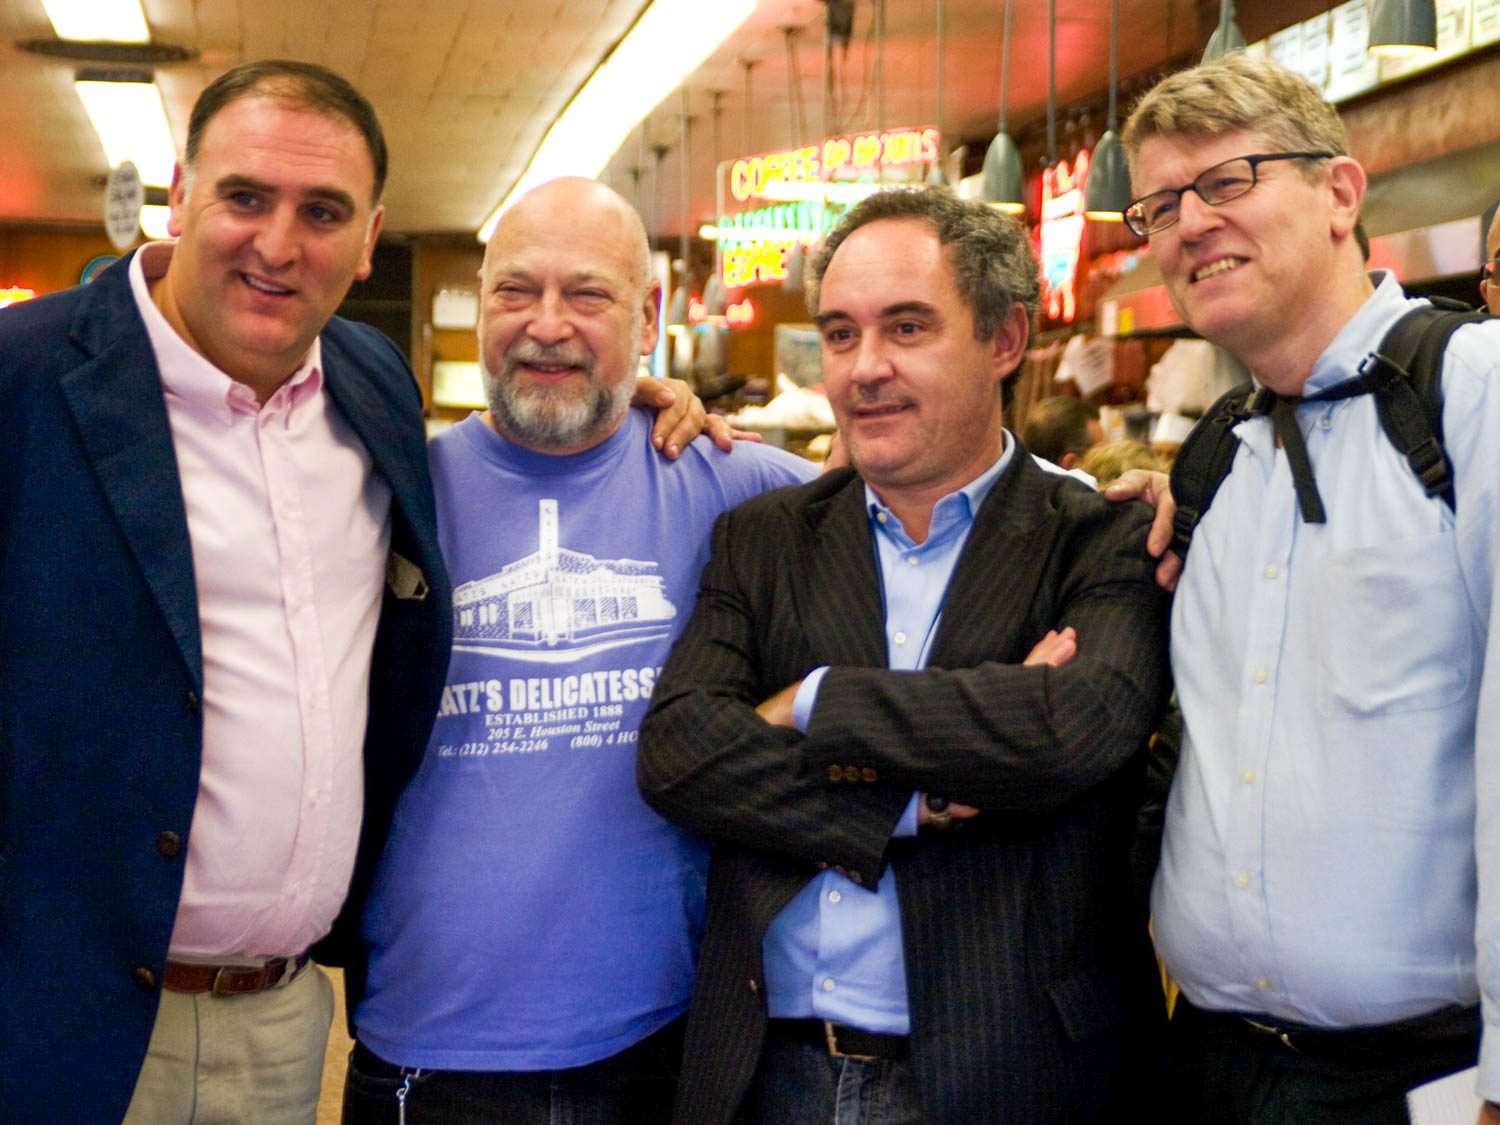 主厨josise andr<s:1>， Katz的合伙人Alan Dell，主厨Ferran adri<e:1>和Ed Levine在Katz的熟食店拍照